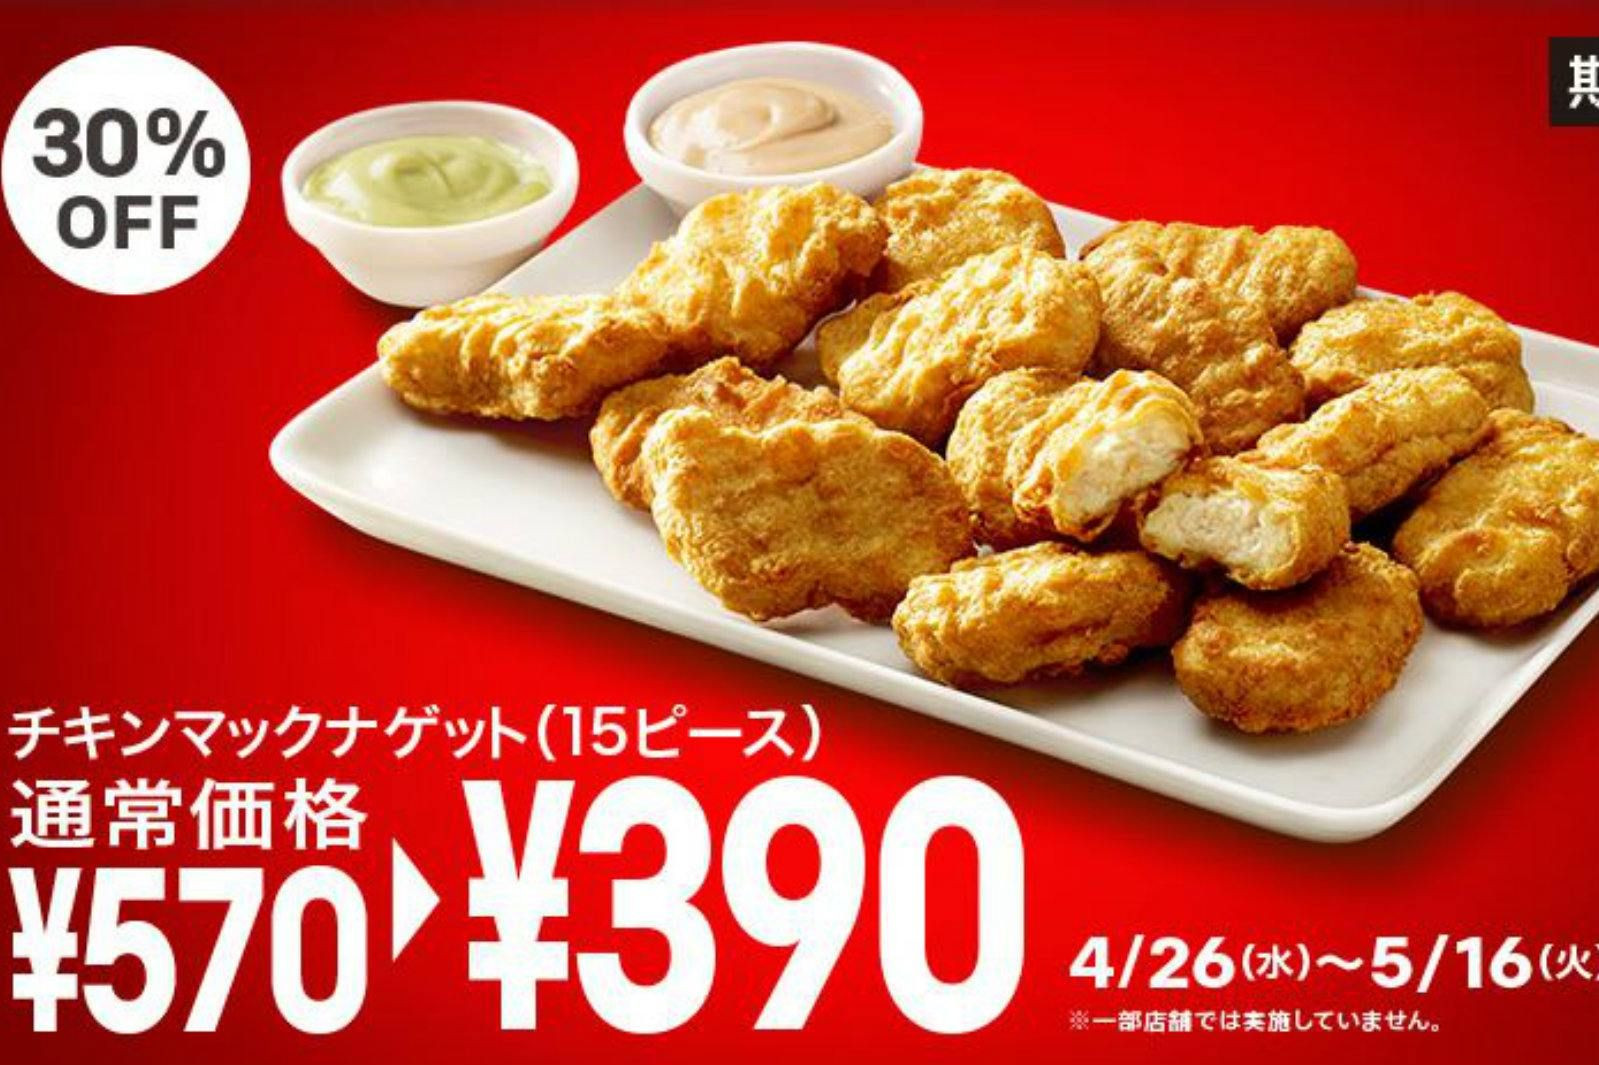 Mcdonalds Dipping Sauces 2017
 McDonald’s Japan Introduces Hot New Dipping Sauces for